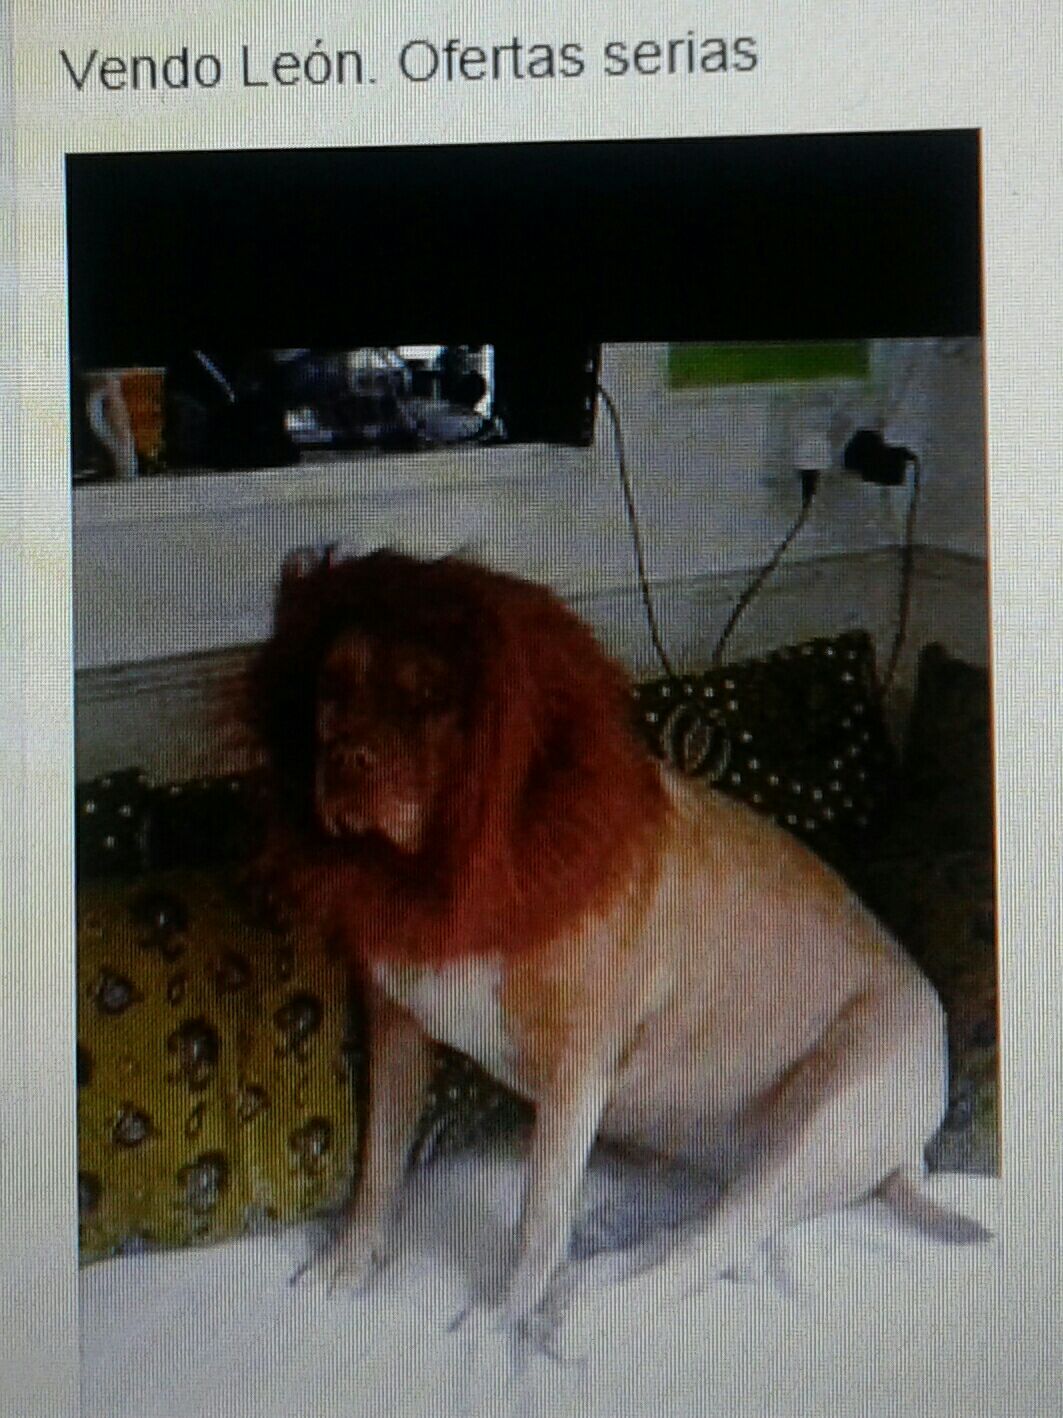 un perro gordo con peluca xd - meme